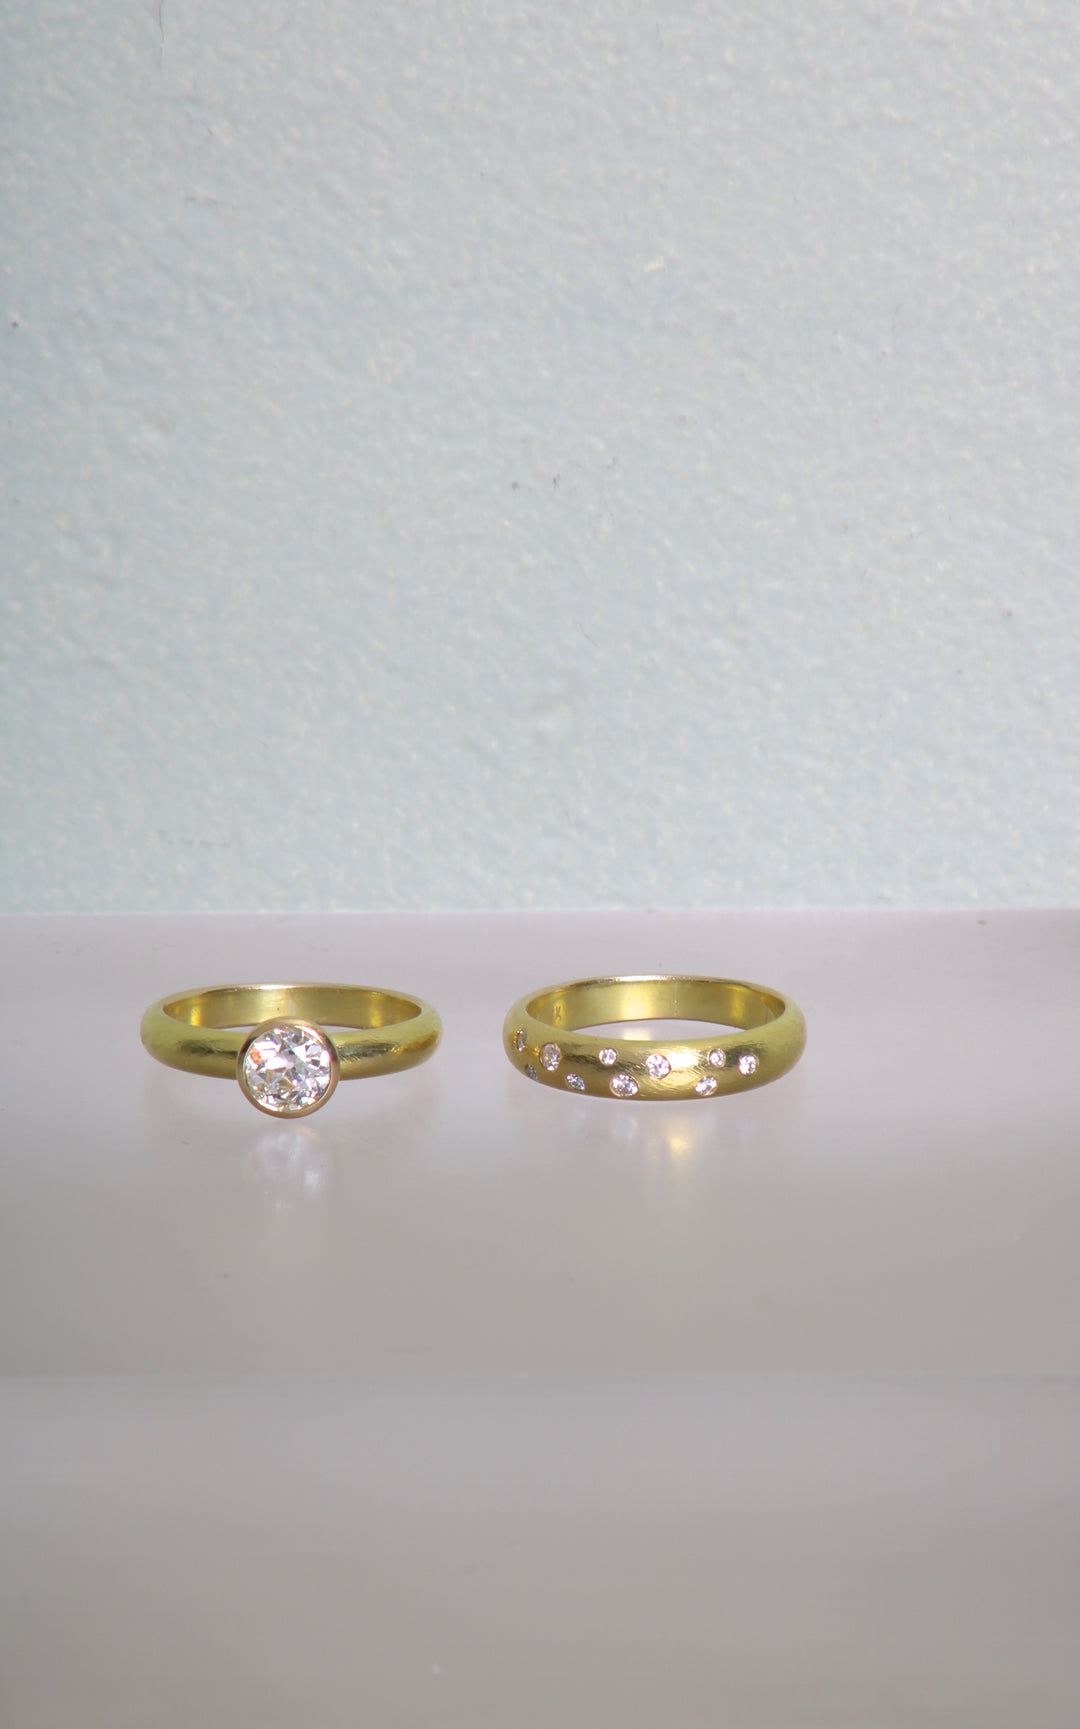 Rounded, Whimsical Set Diamond Ring (09409)